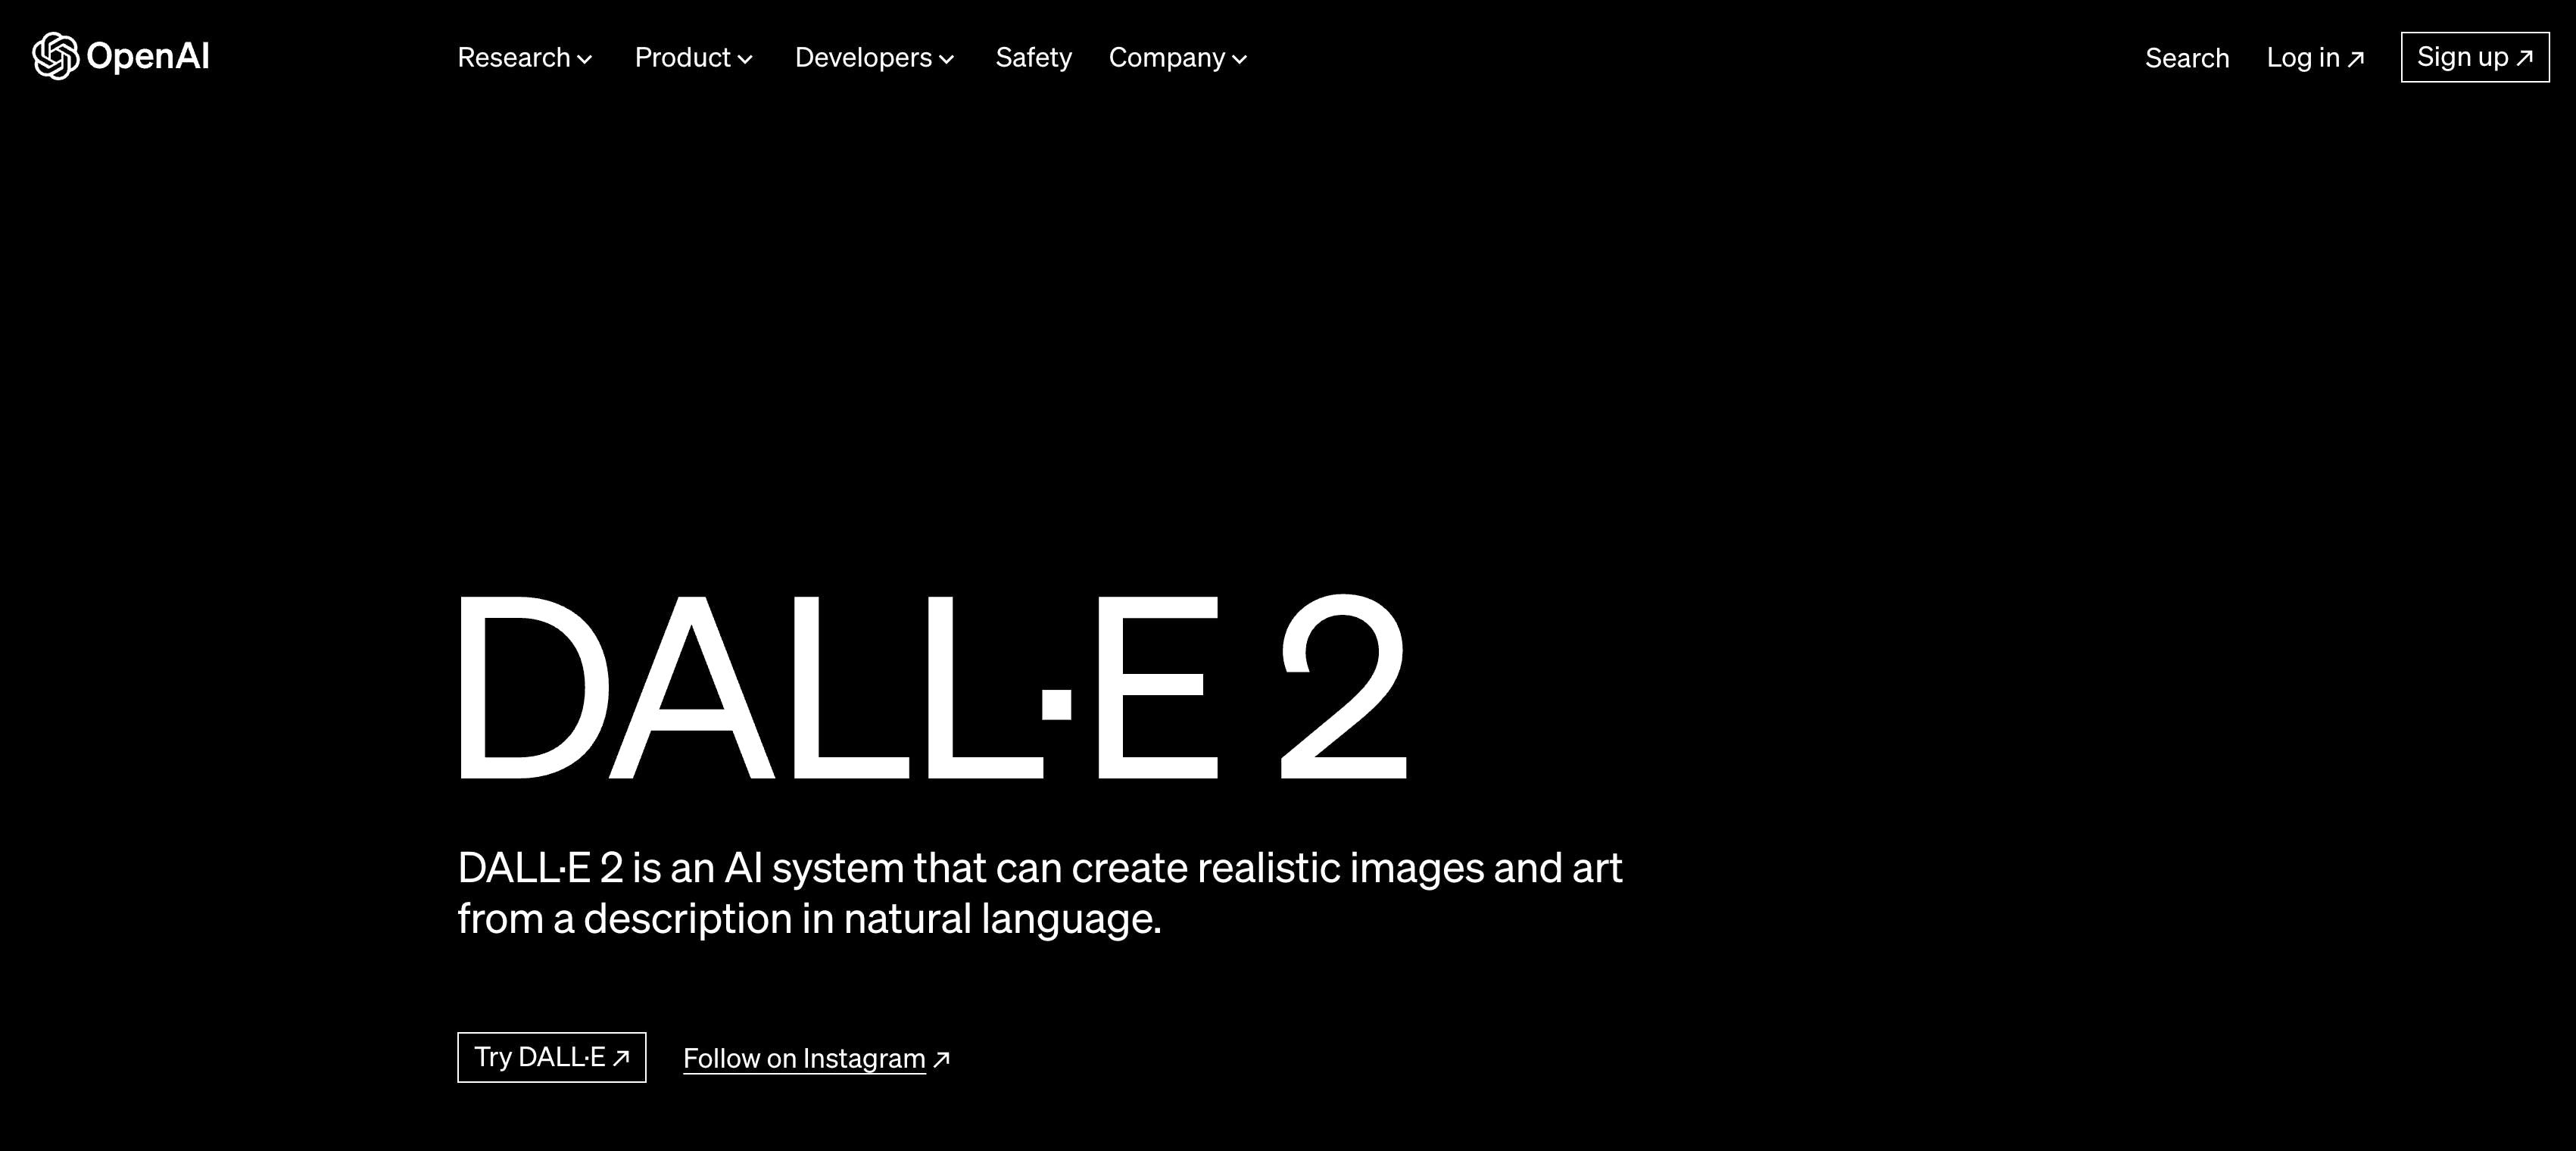 DALLE-2 website